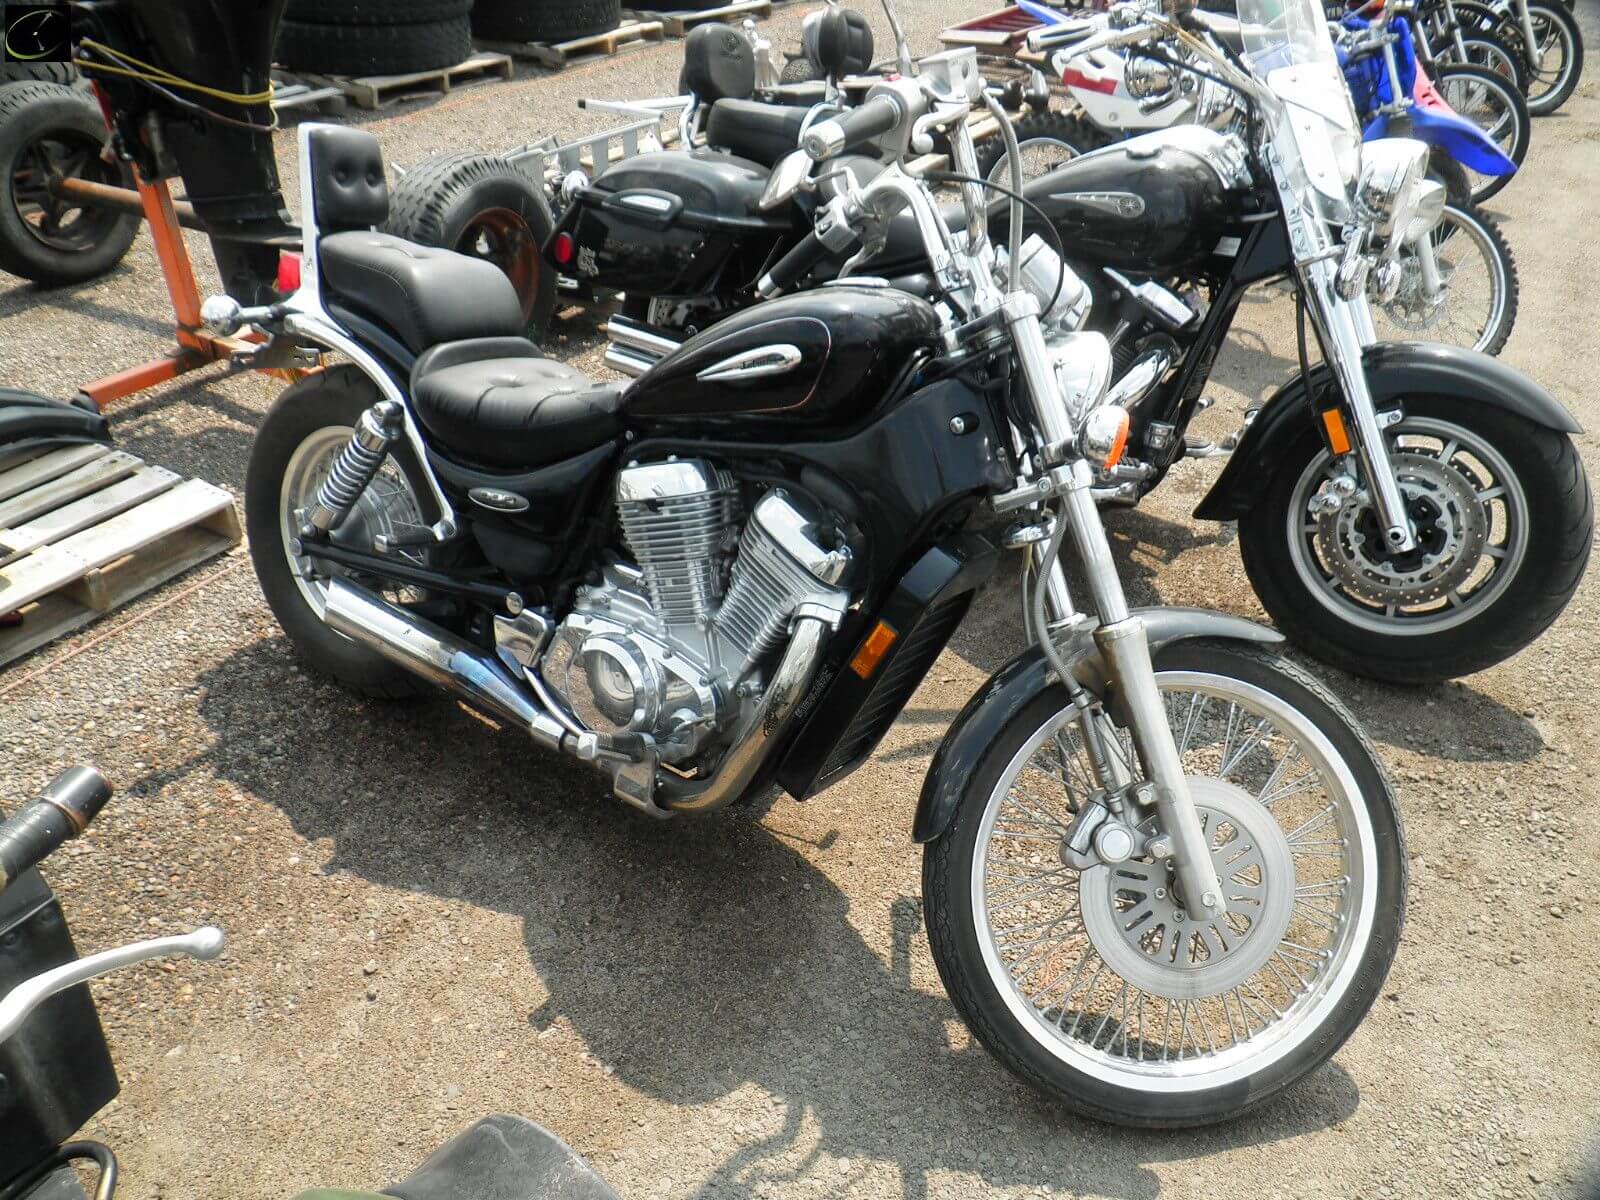 Suzuki Intruder 800 motorcycle main image